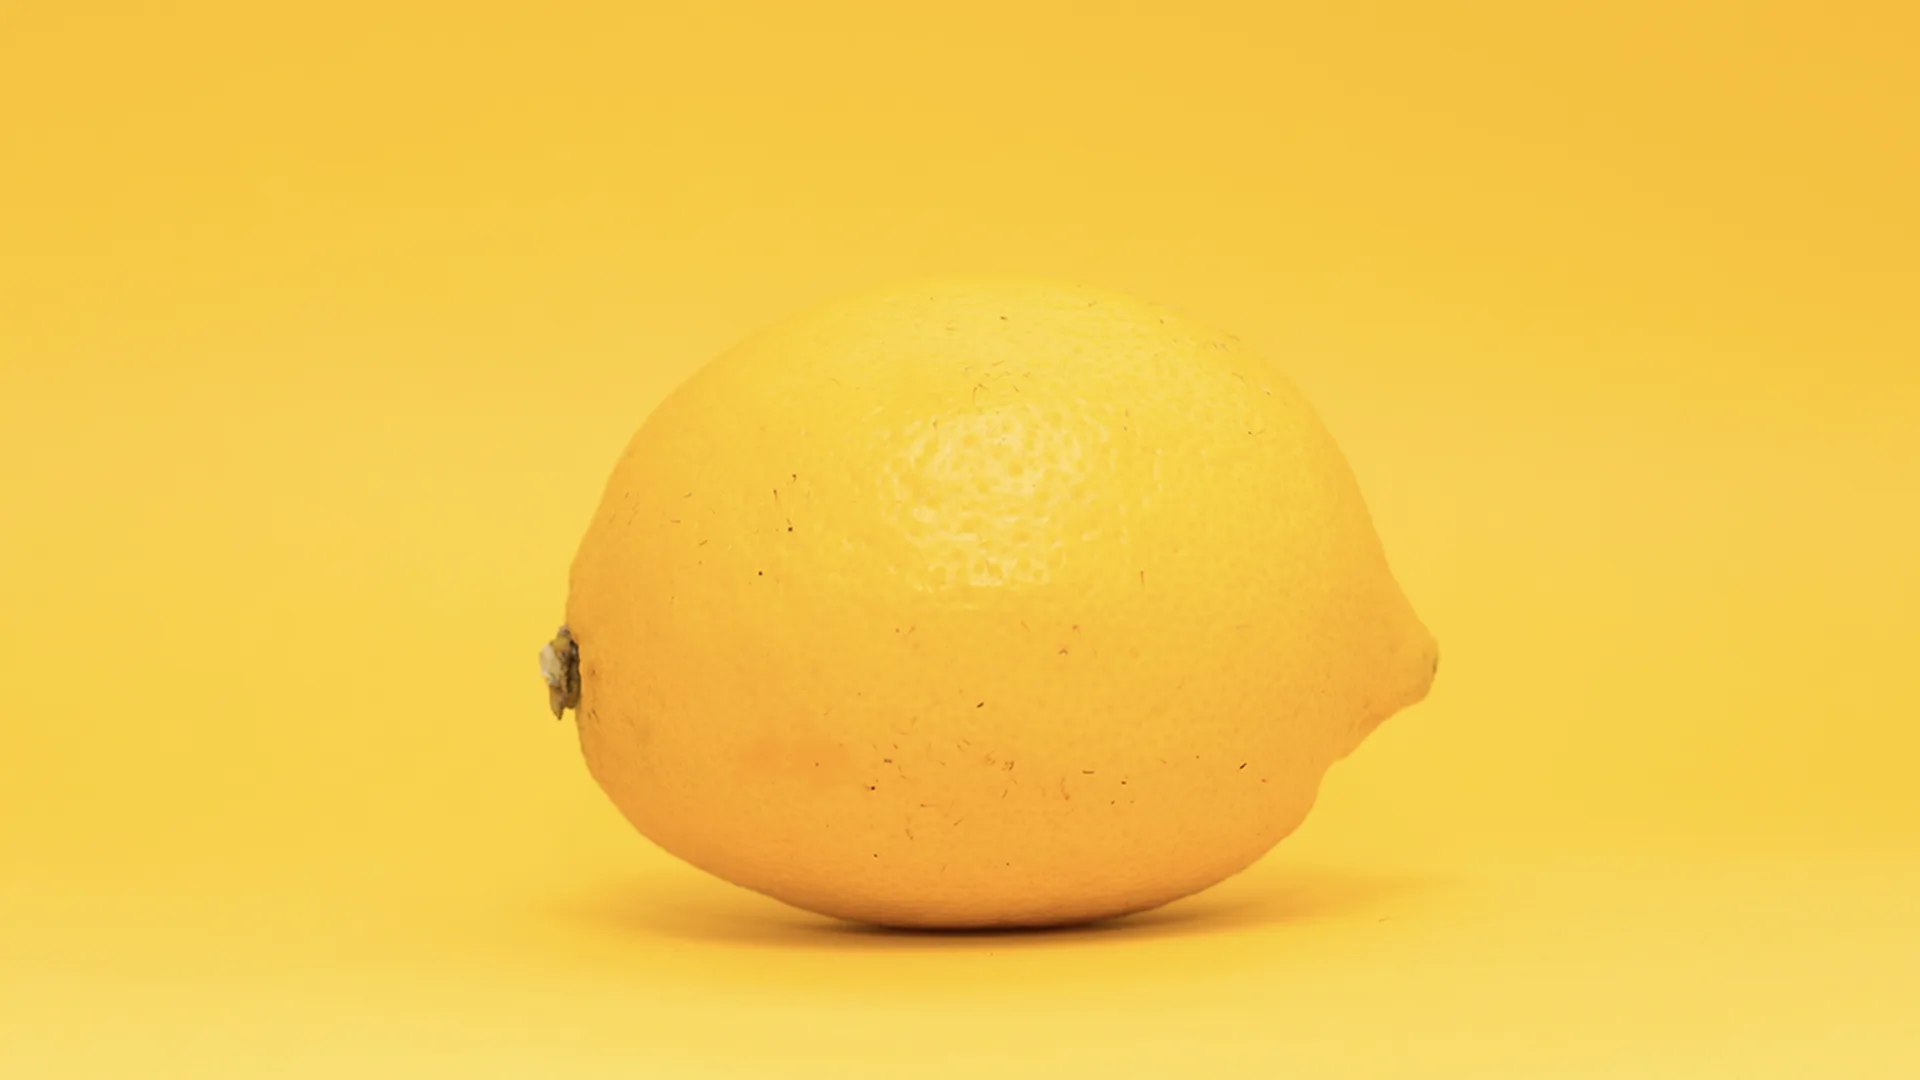 Lemon on yellow background